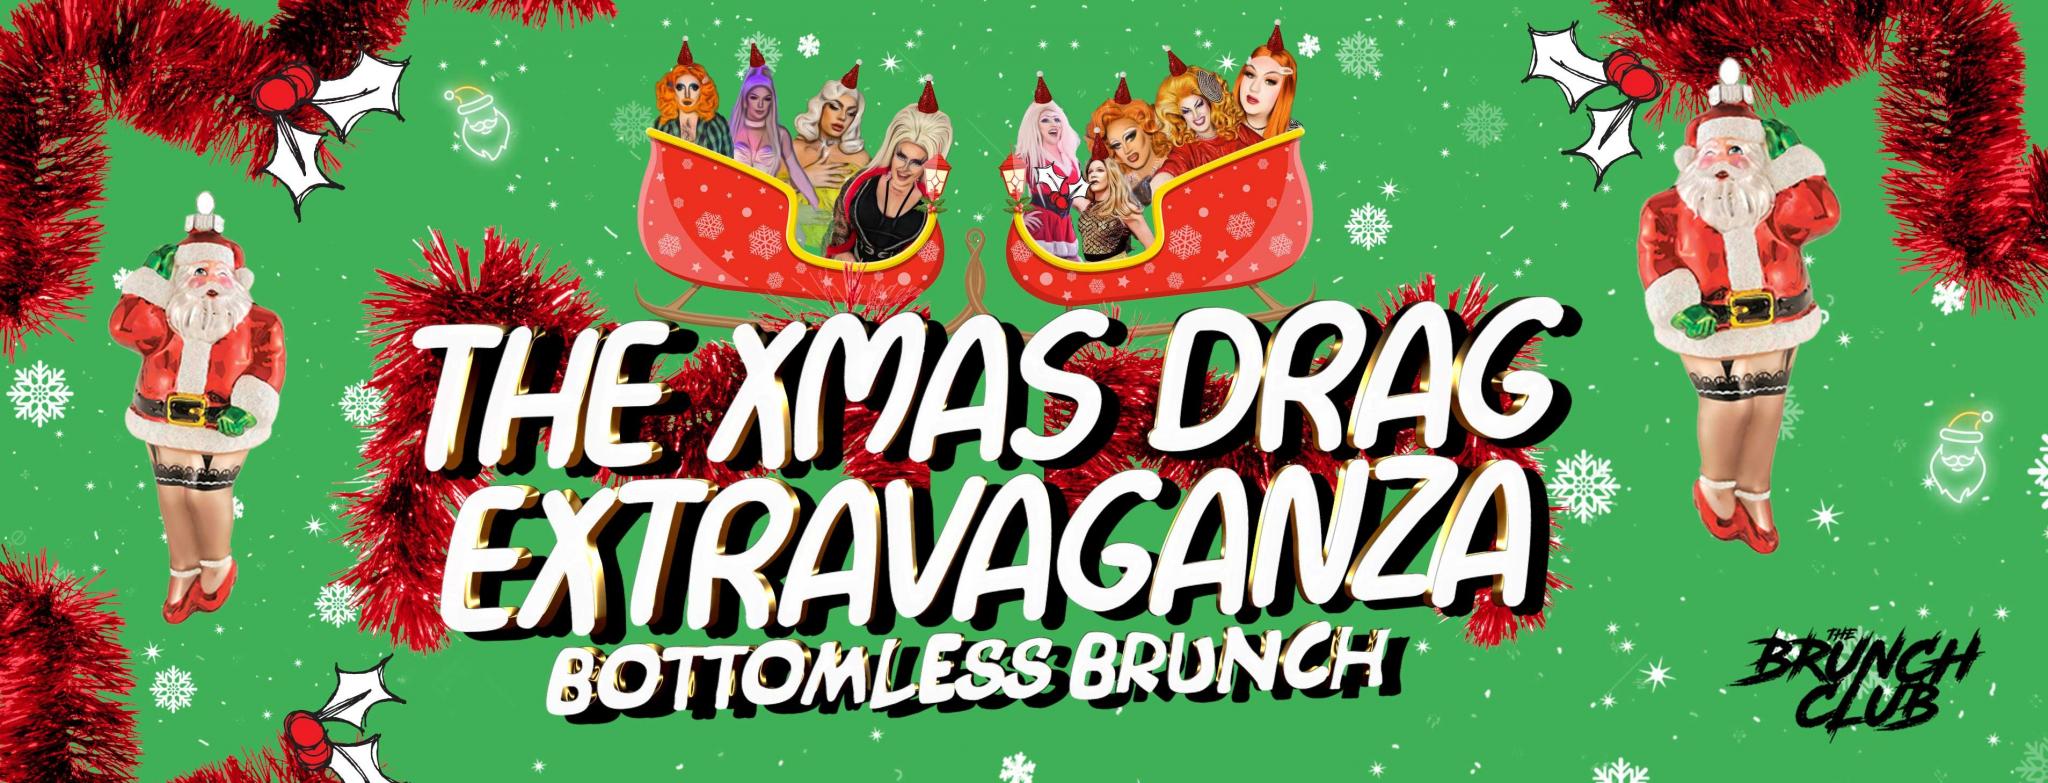 The Xmas Drag Extravaganza Bottomless Brunch - London